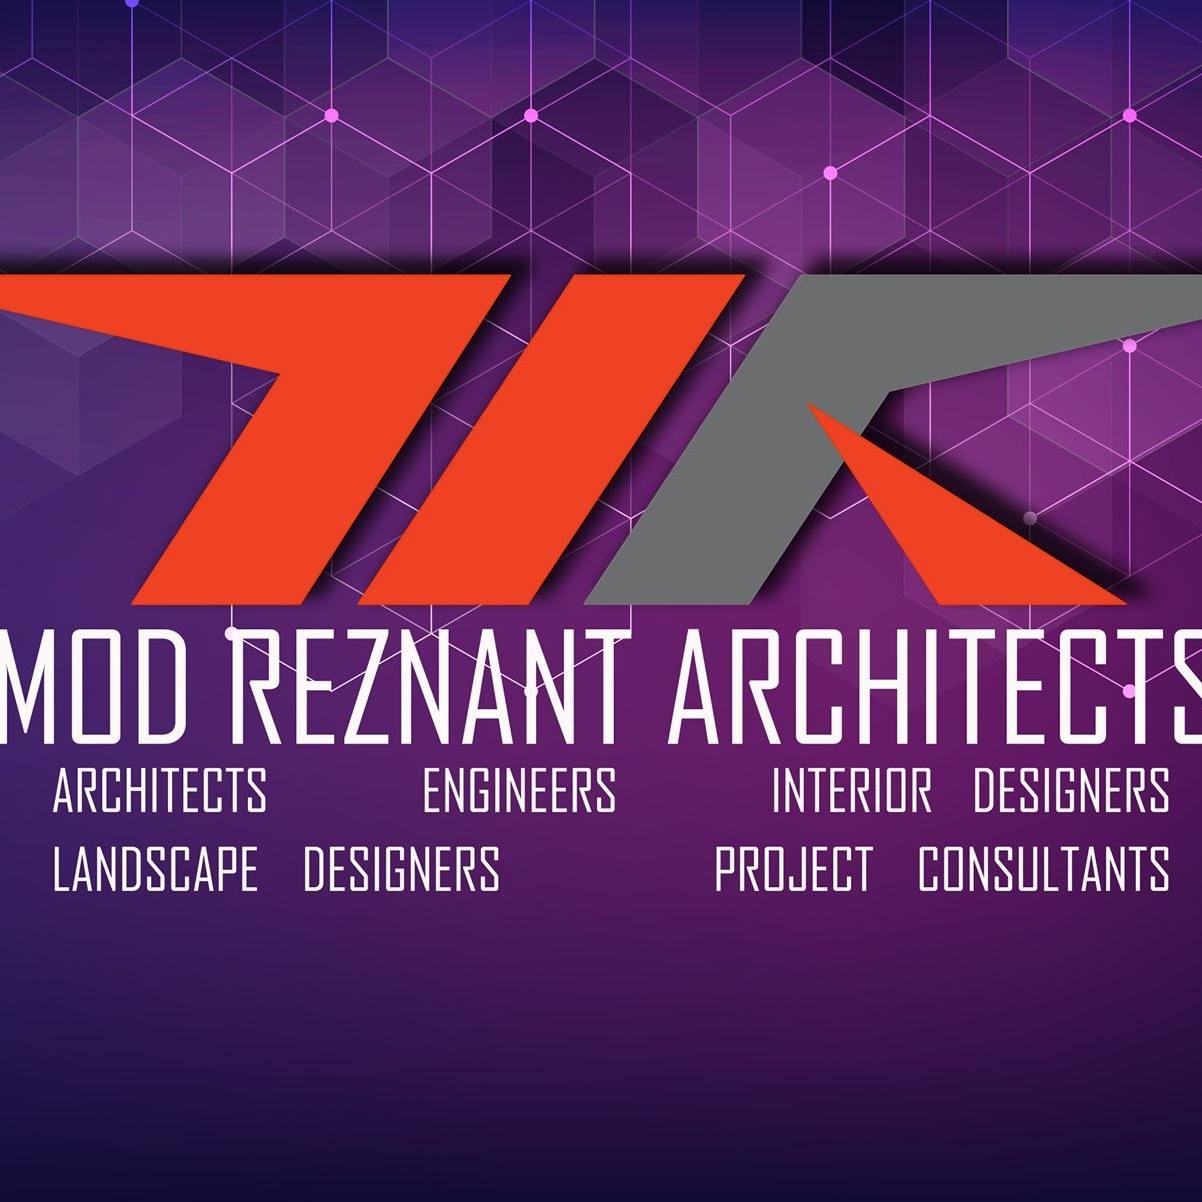 Mod Reznant Architects|Architect|Professional Services